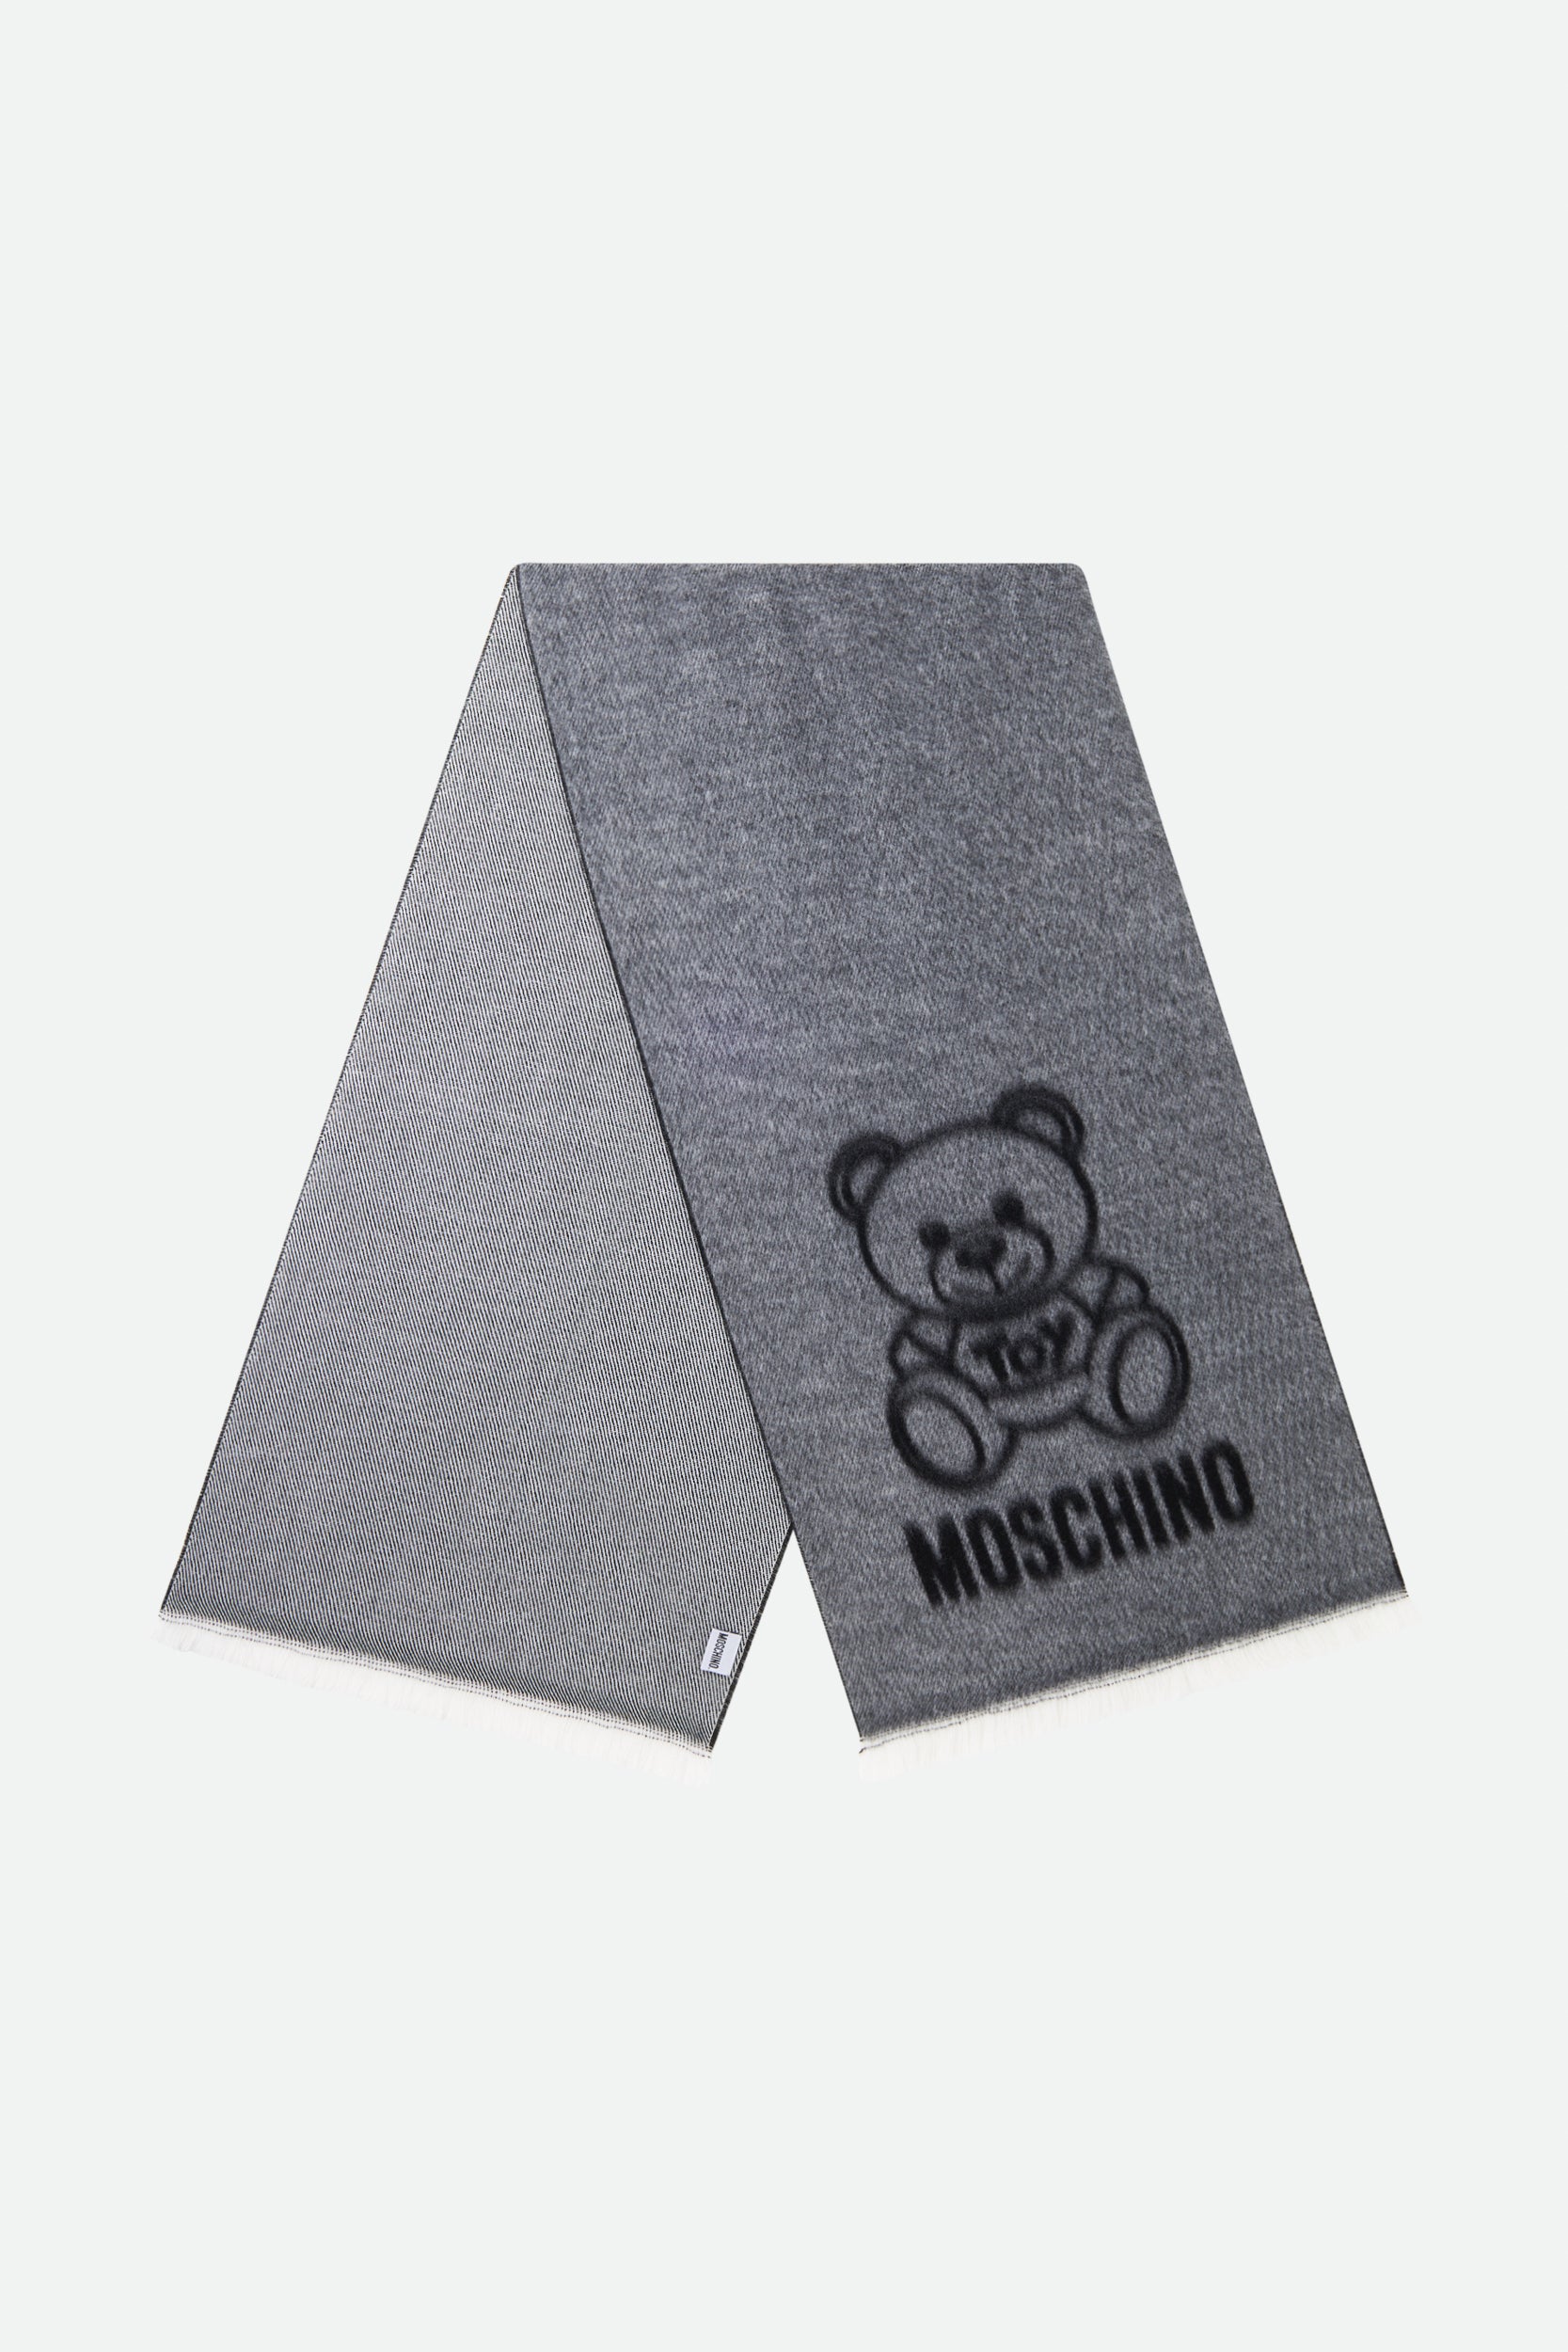 Moschino Gray Wool Scarf